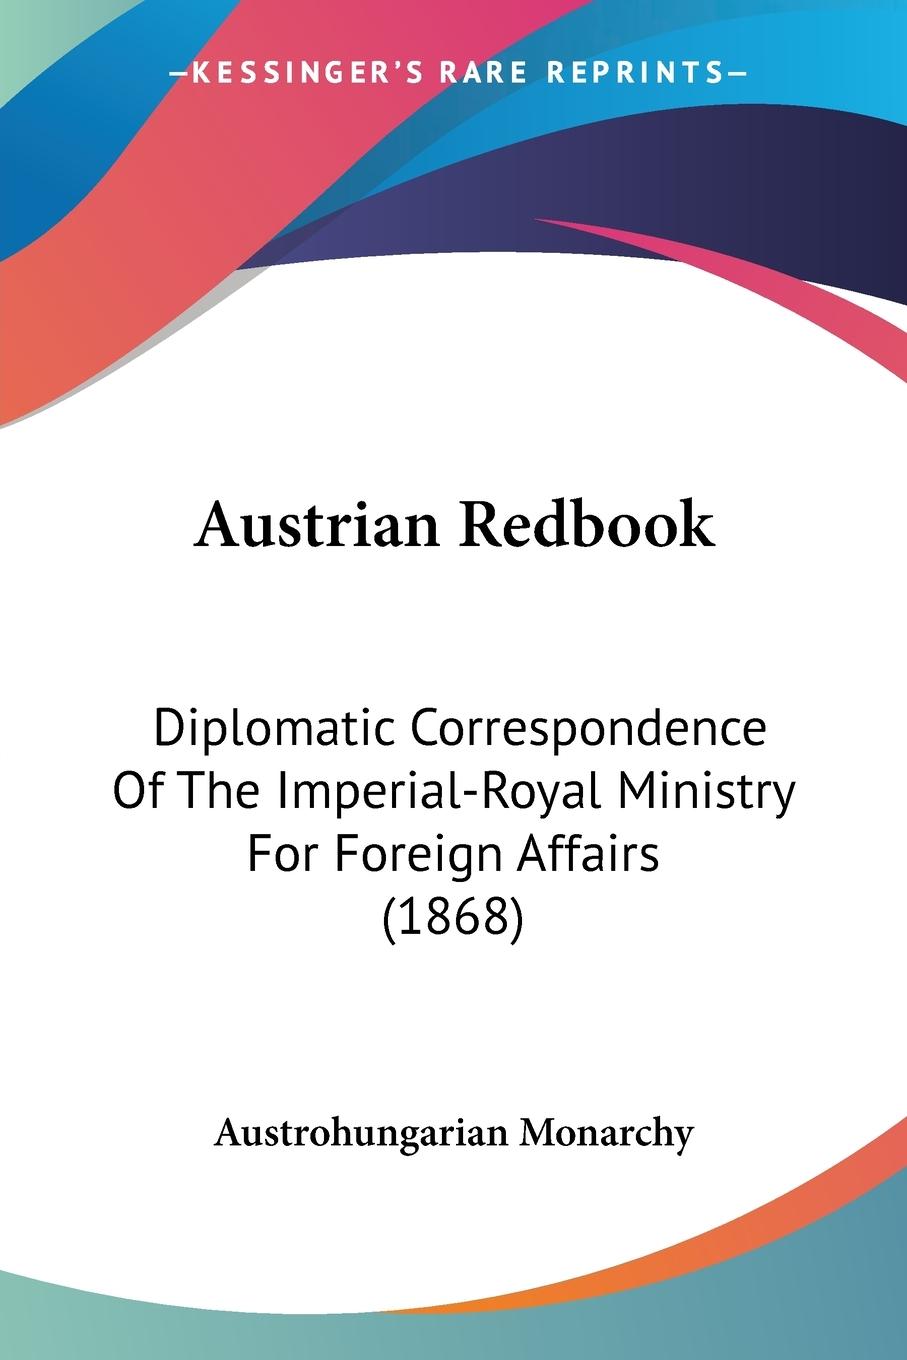 Austrian Redbook - Austrohungarian Monarchy